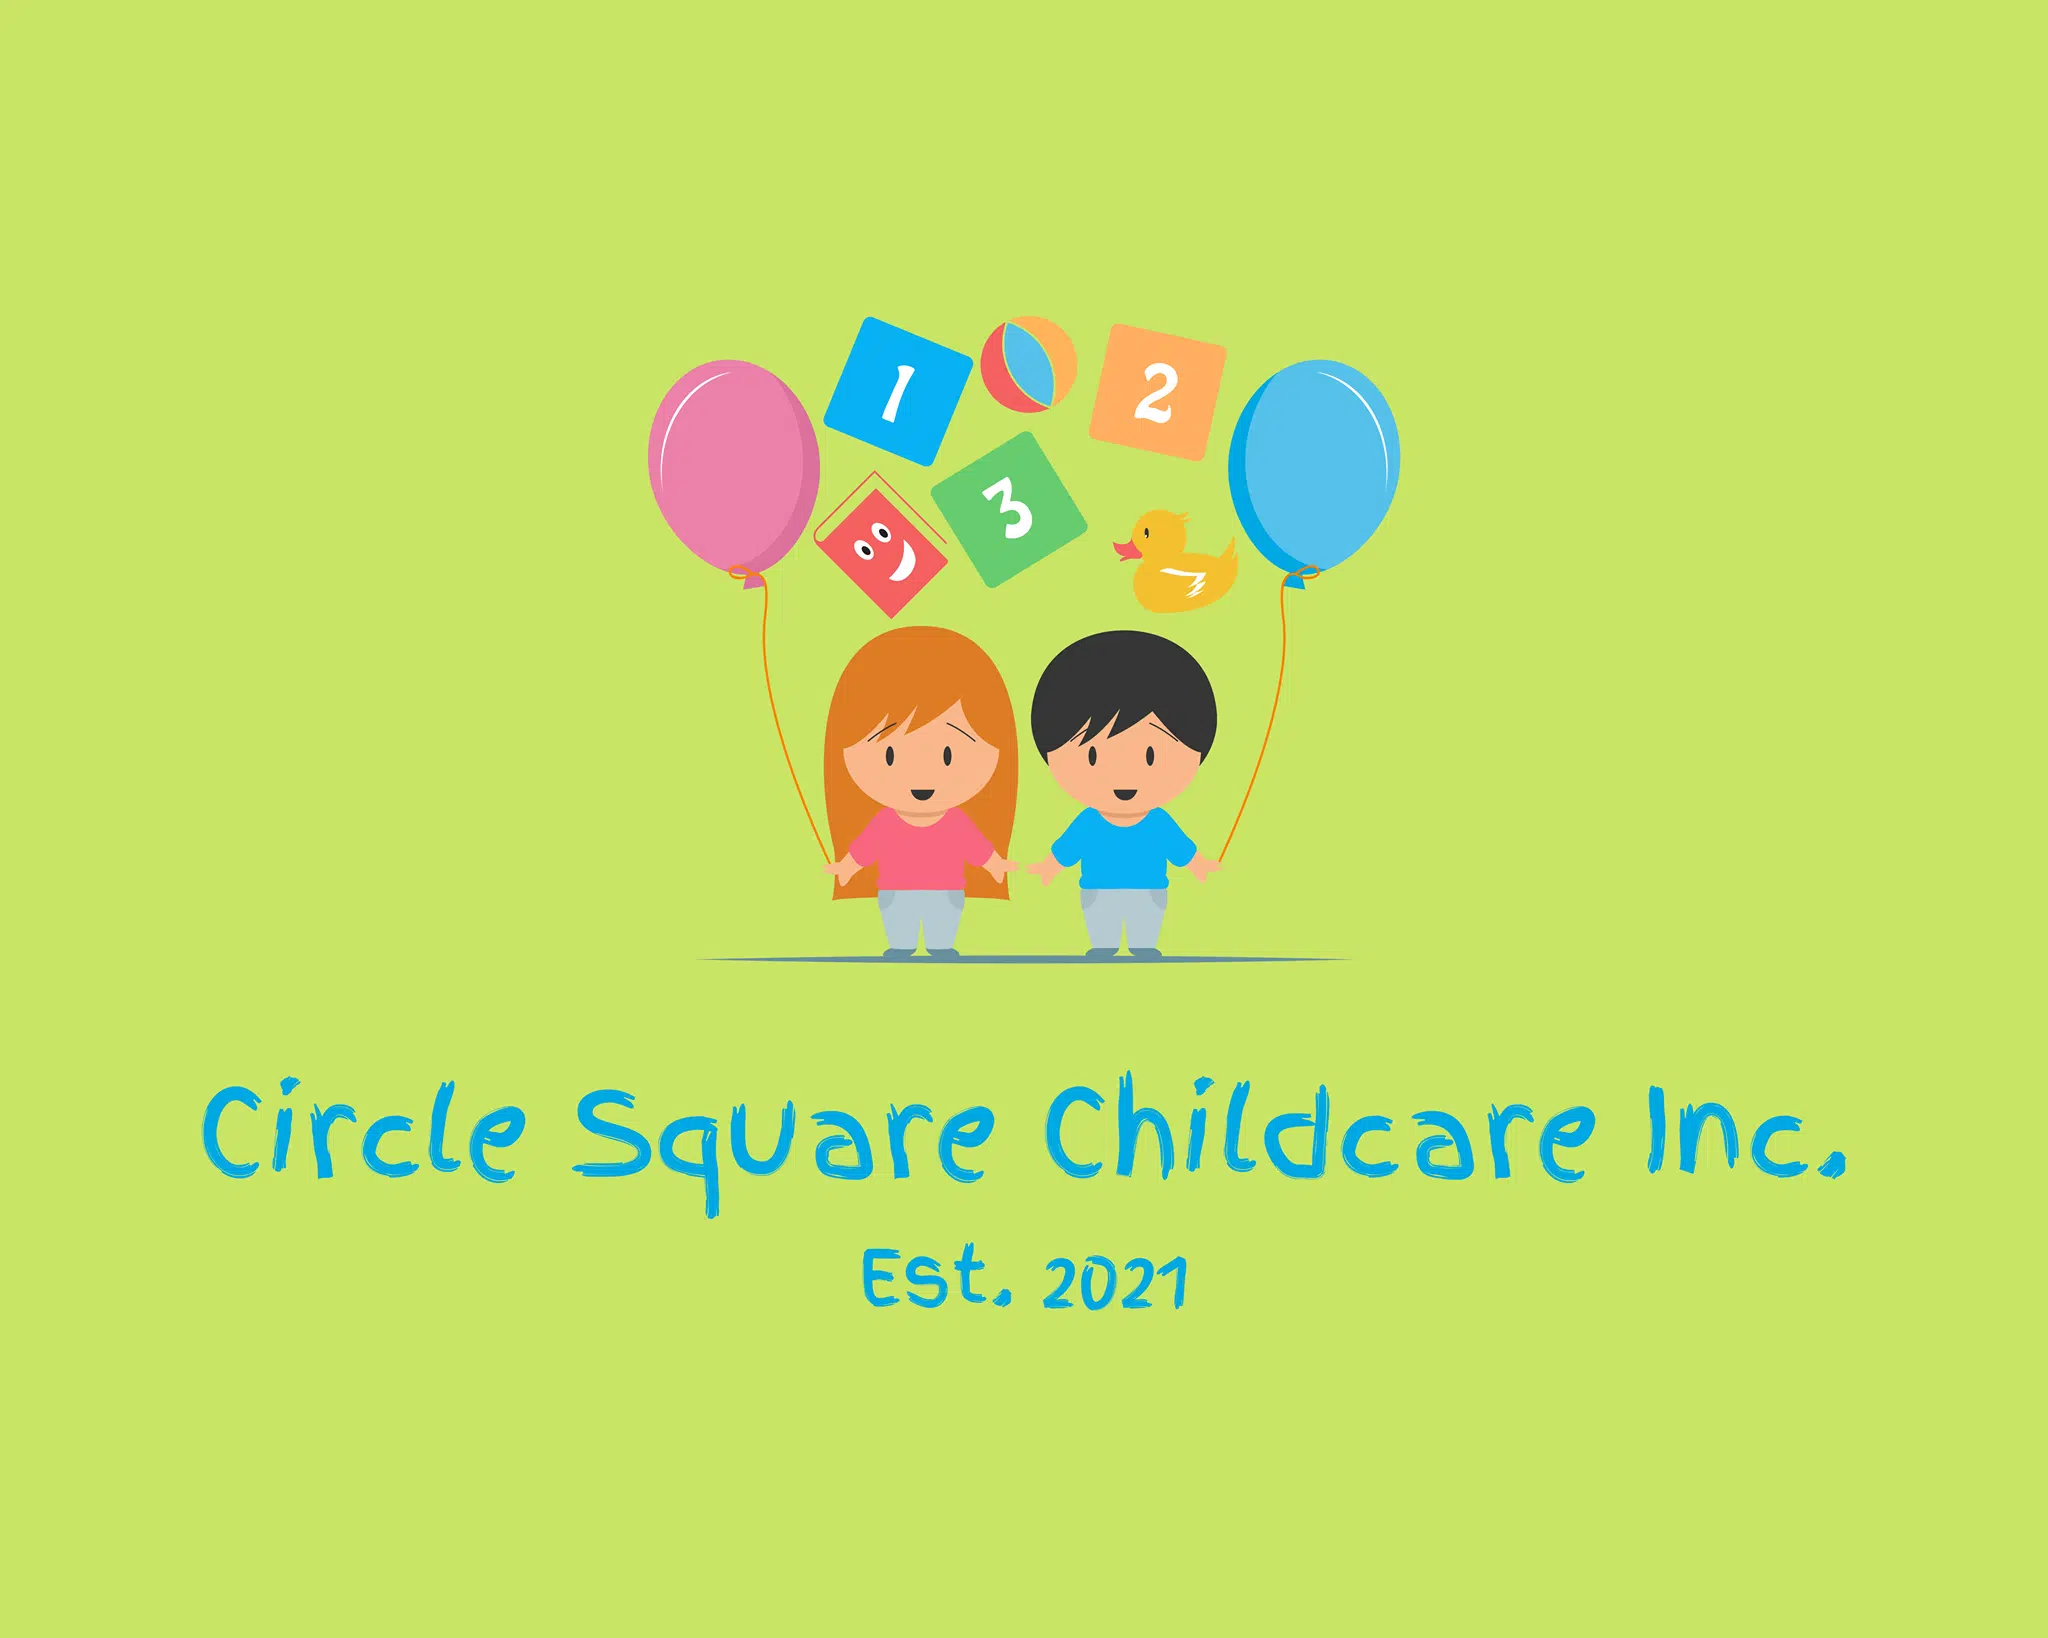 Circle Square Childcare